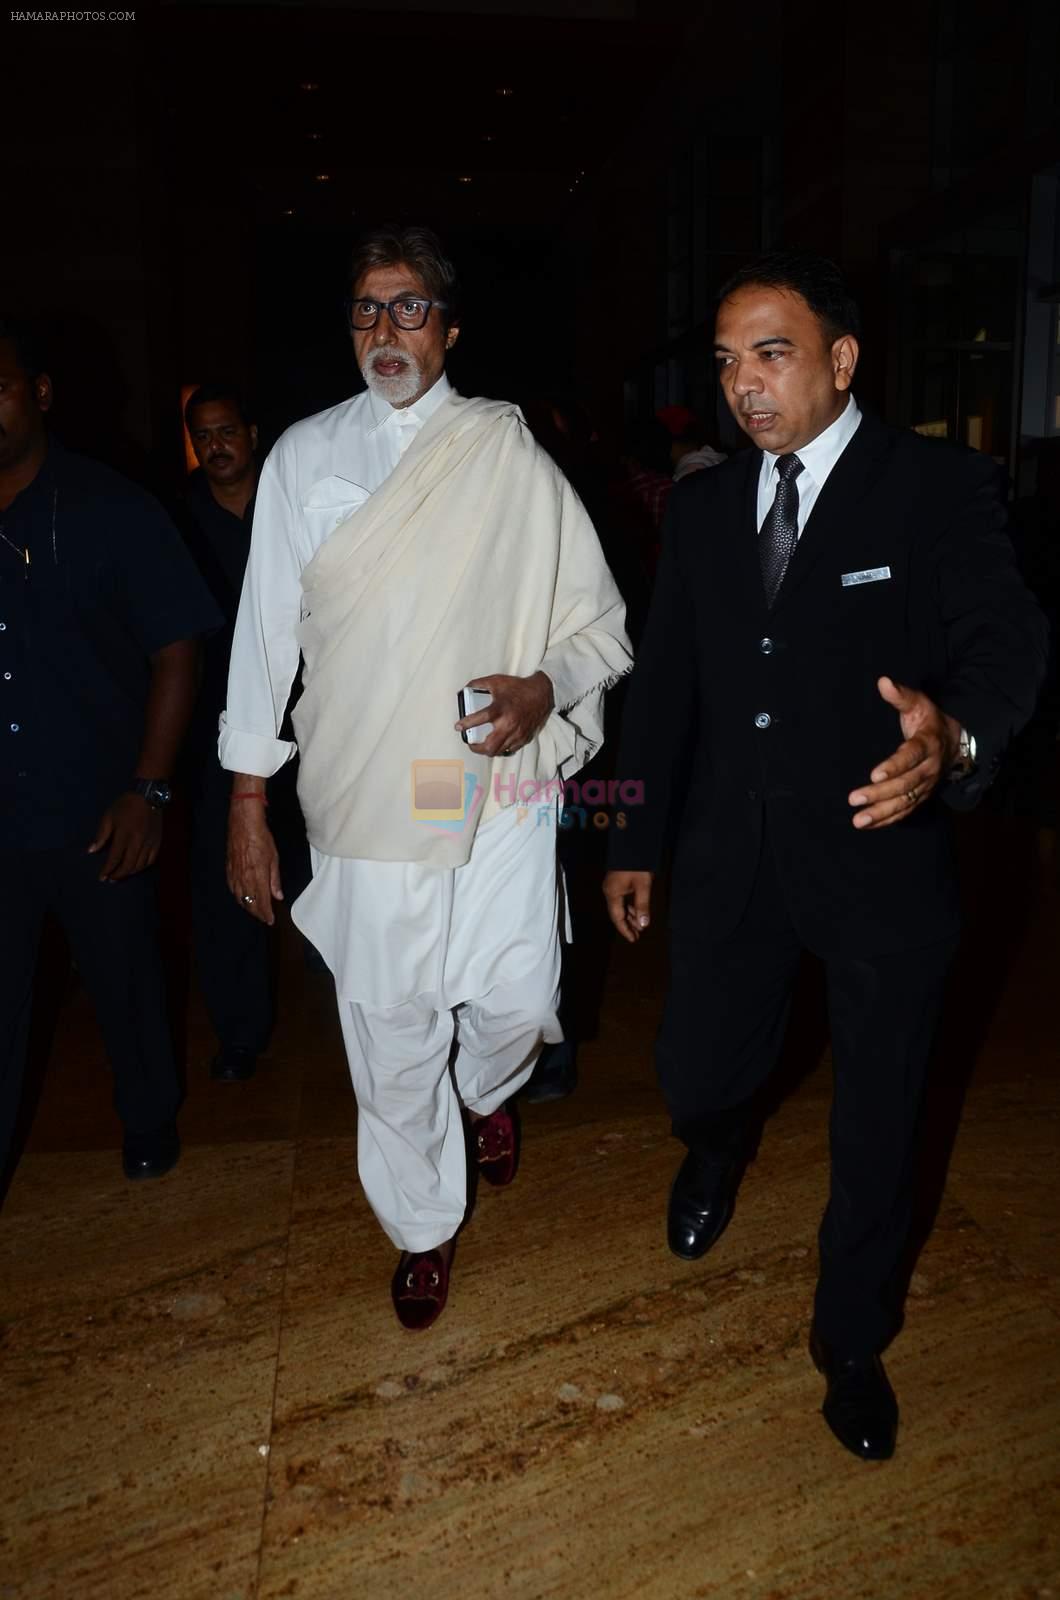 Amitabh Bachchan at Manish Malhotra presents Mijwan-The Legacy in Grand Hyatt, Mumbai on 4th April 2015